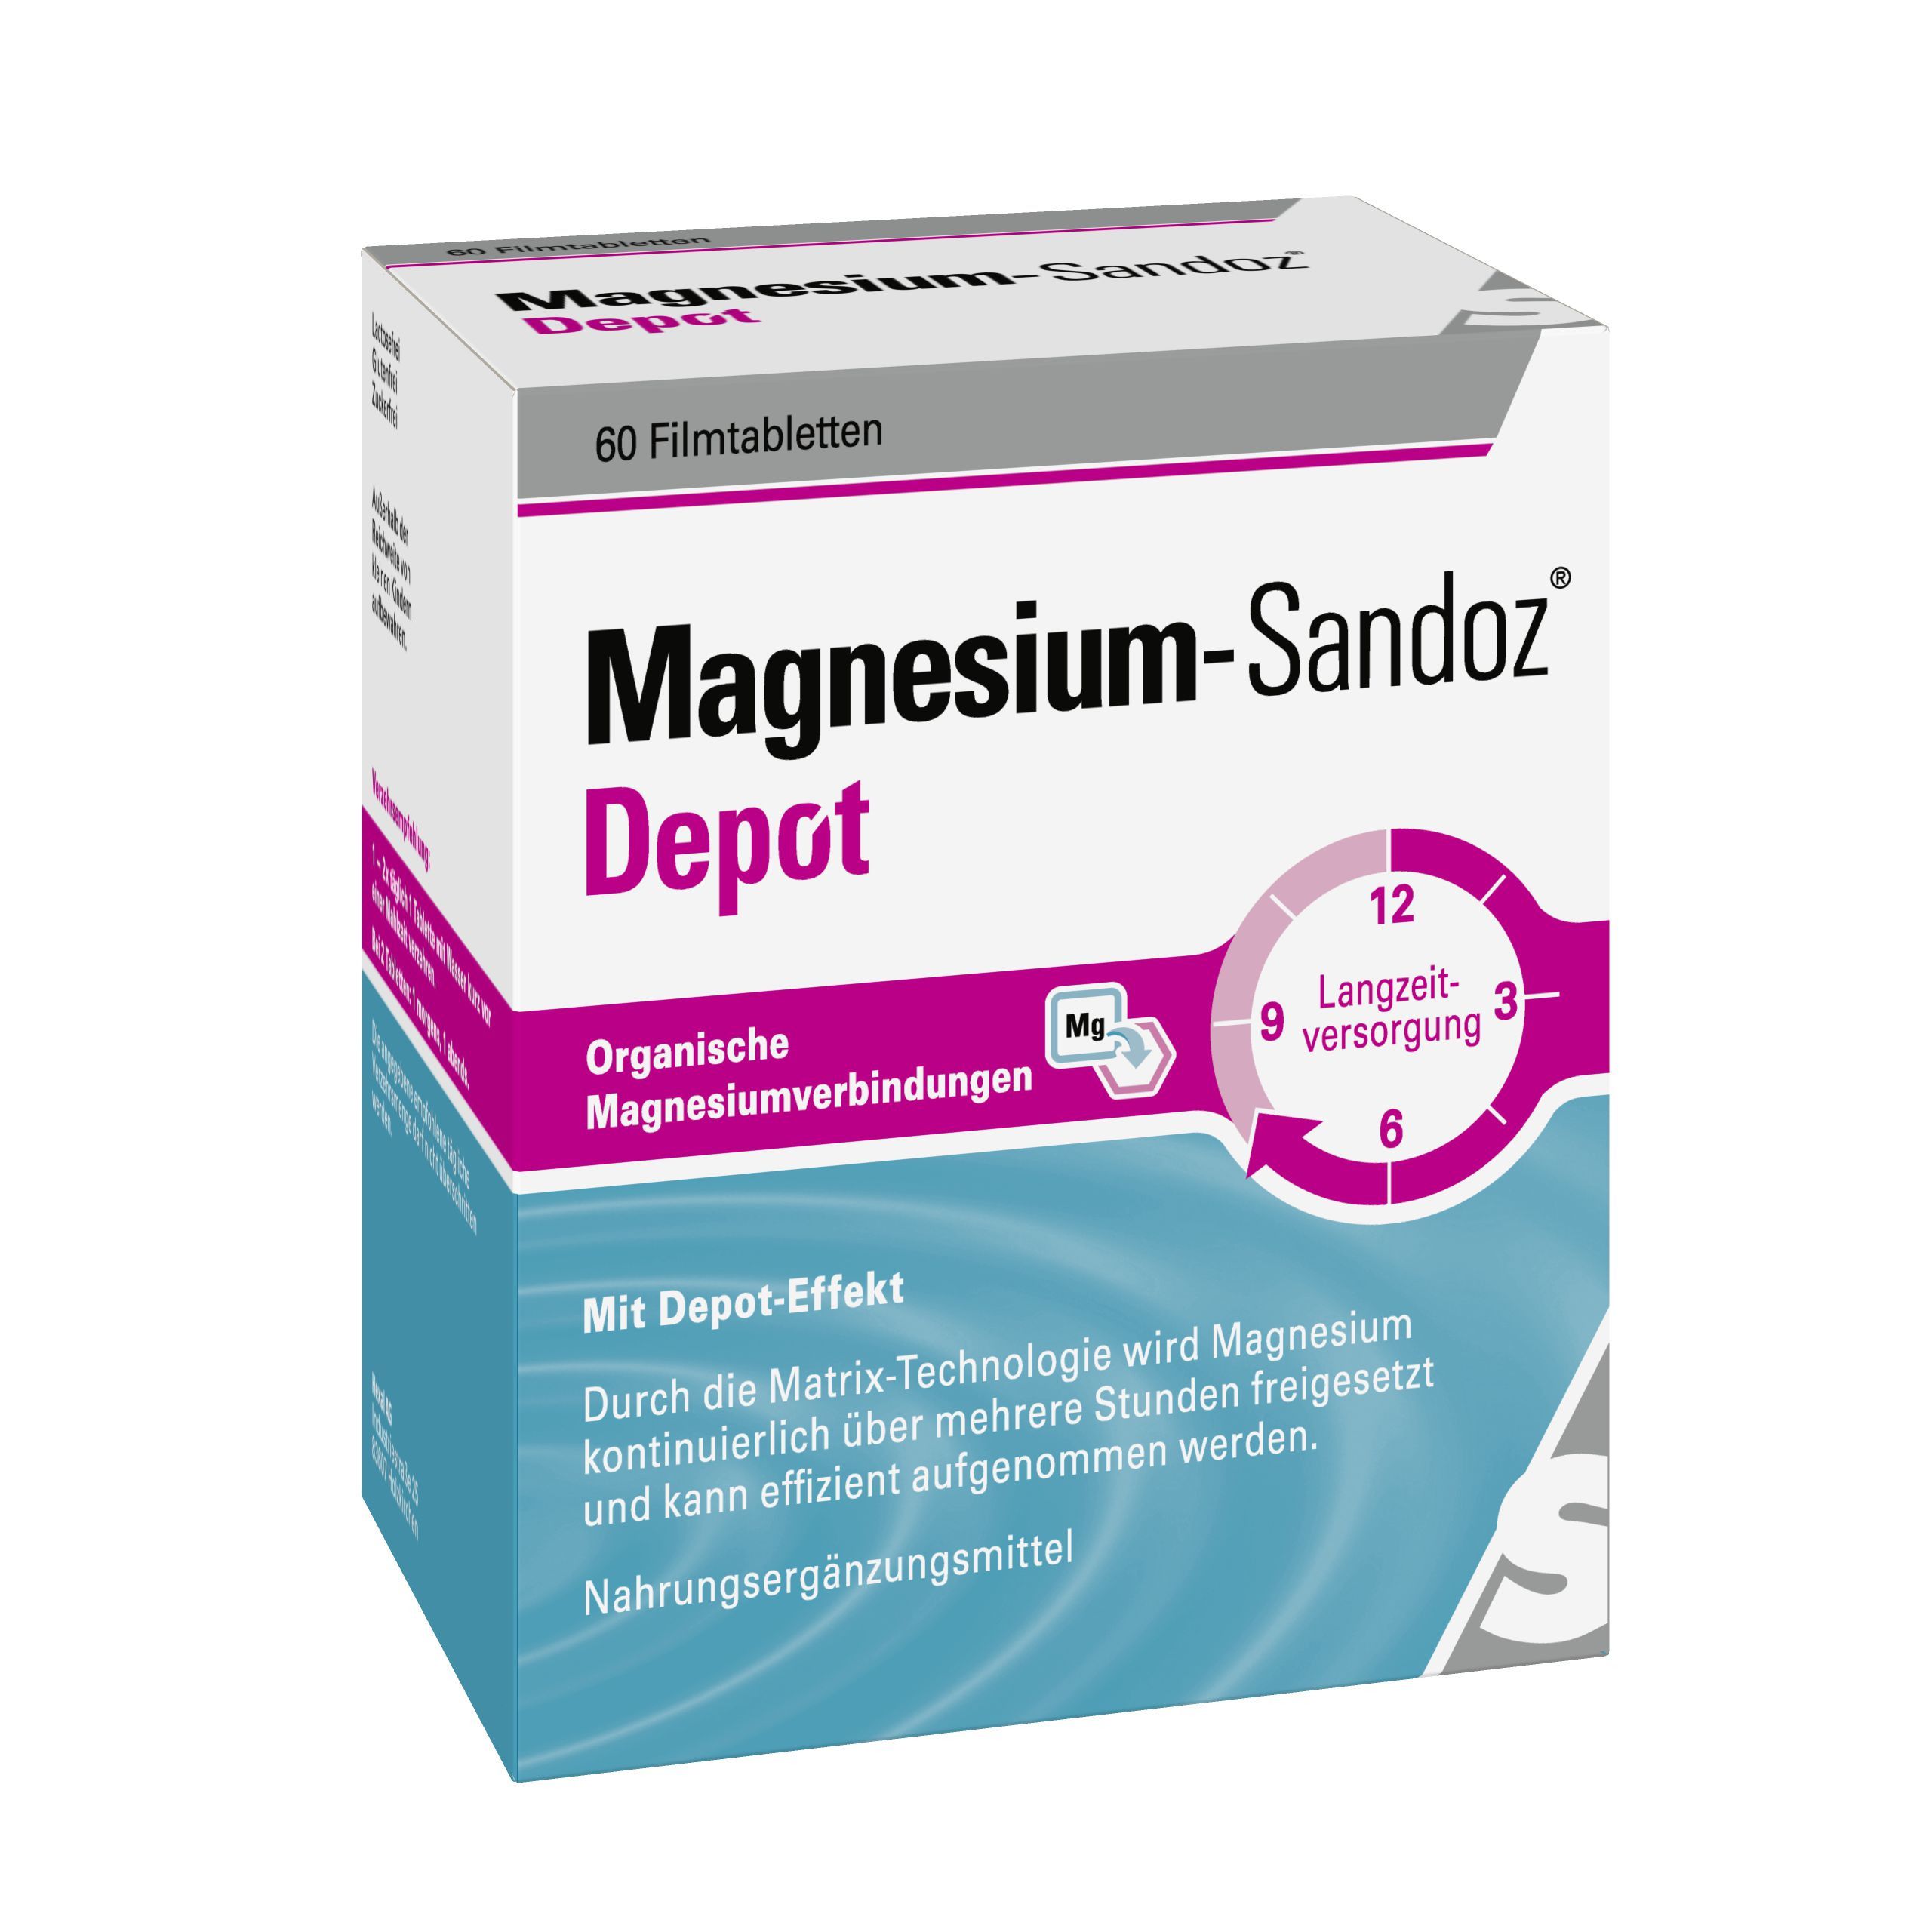 Magnesium-Sandoz® Depot